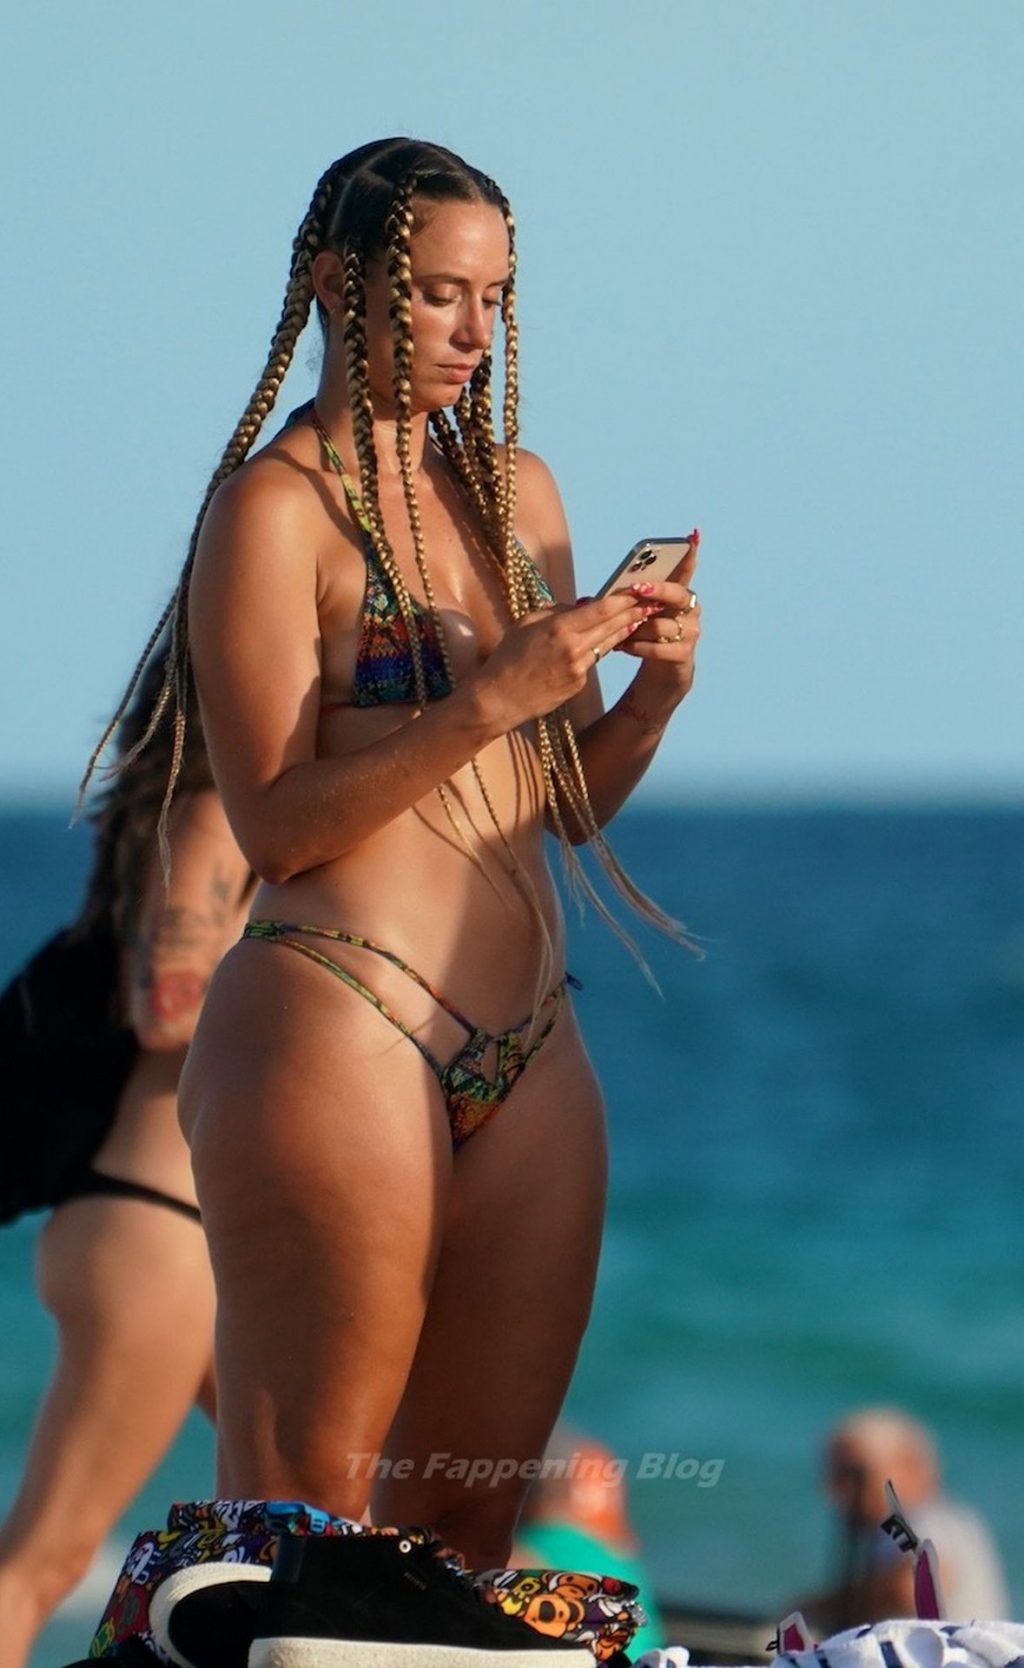 YesJulz is Seen in a Thong Bikini at the Beach in Miami (12 Photos)